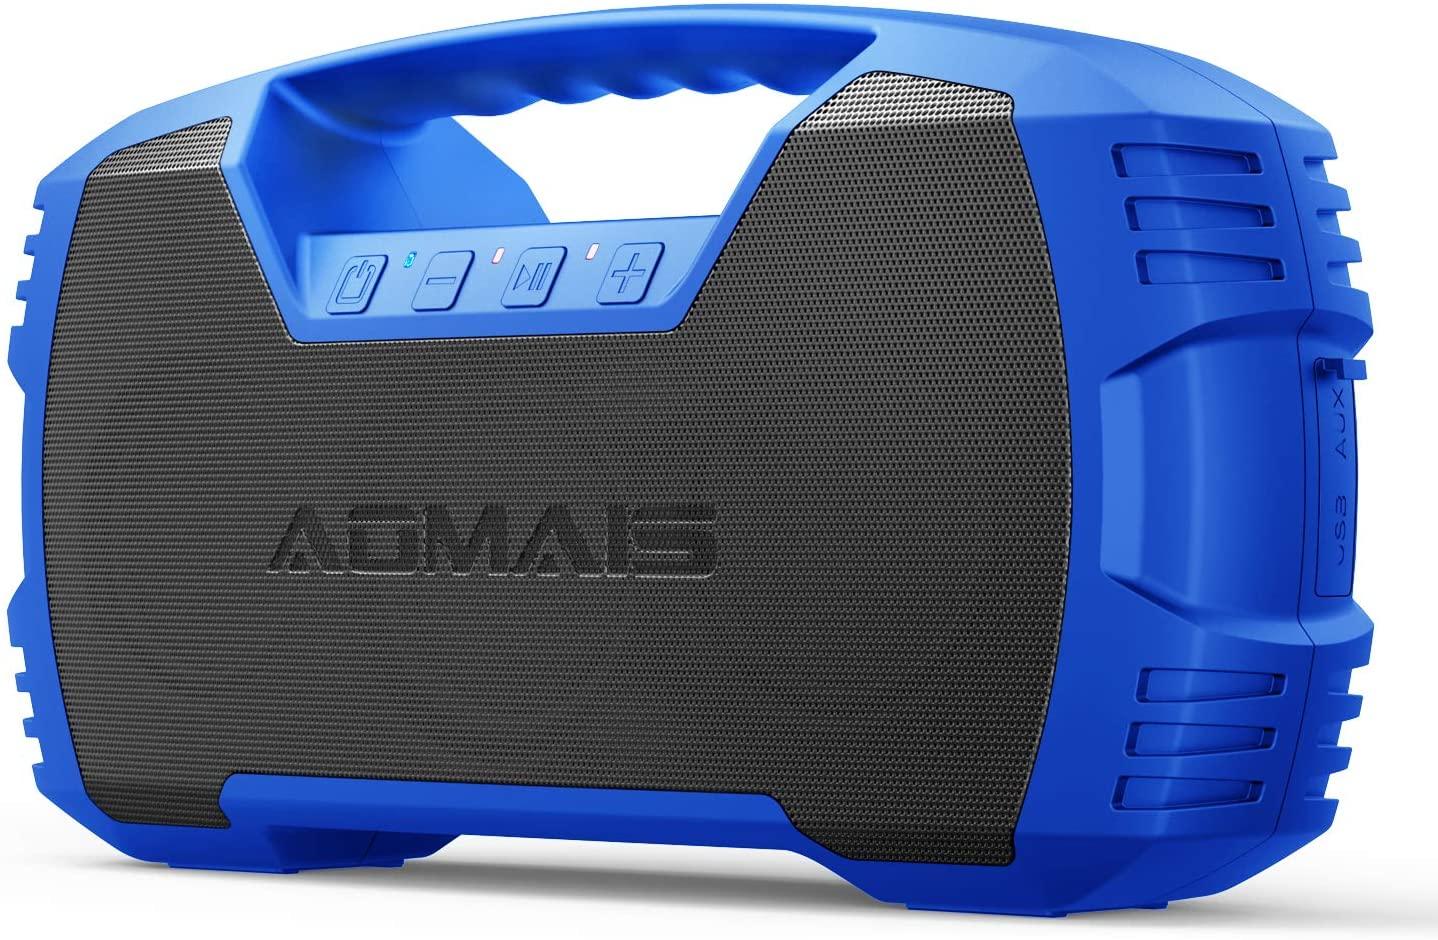 Aomais Go Waterproof Bluetooth Speaker for $48.99 Shipped